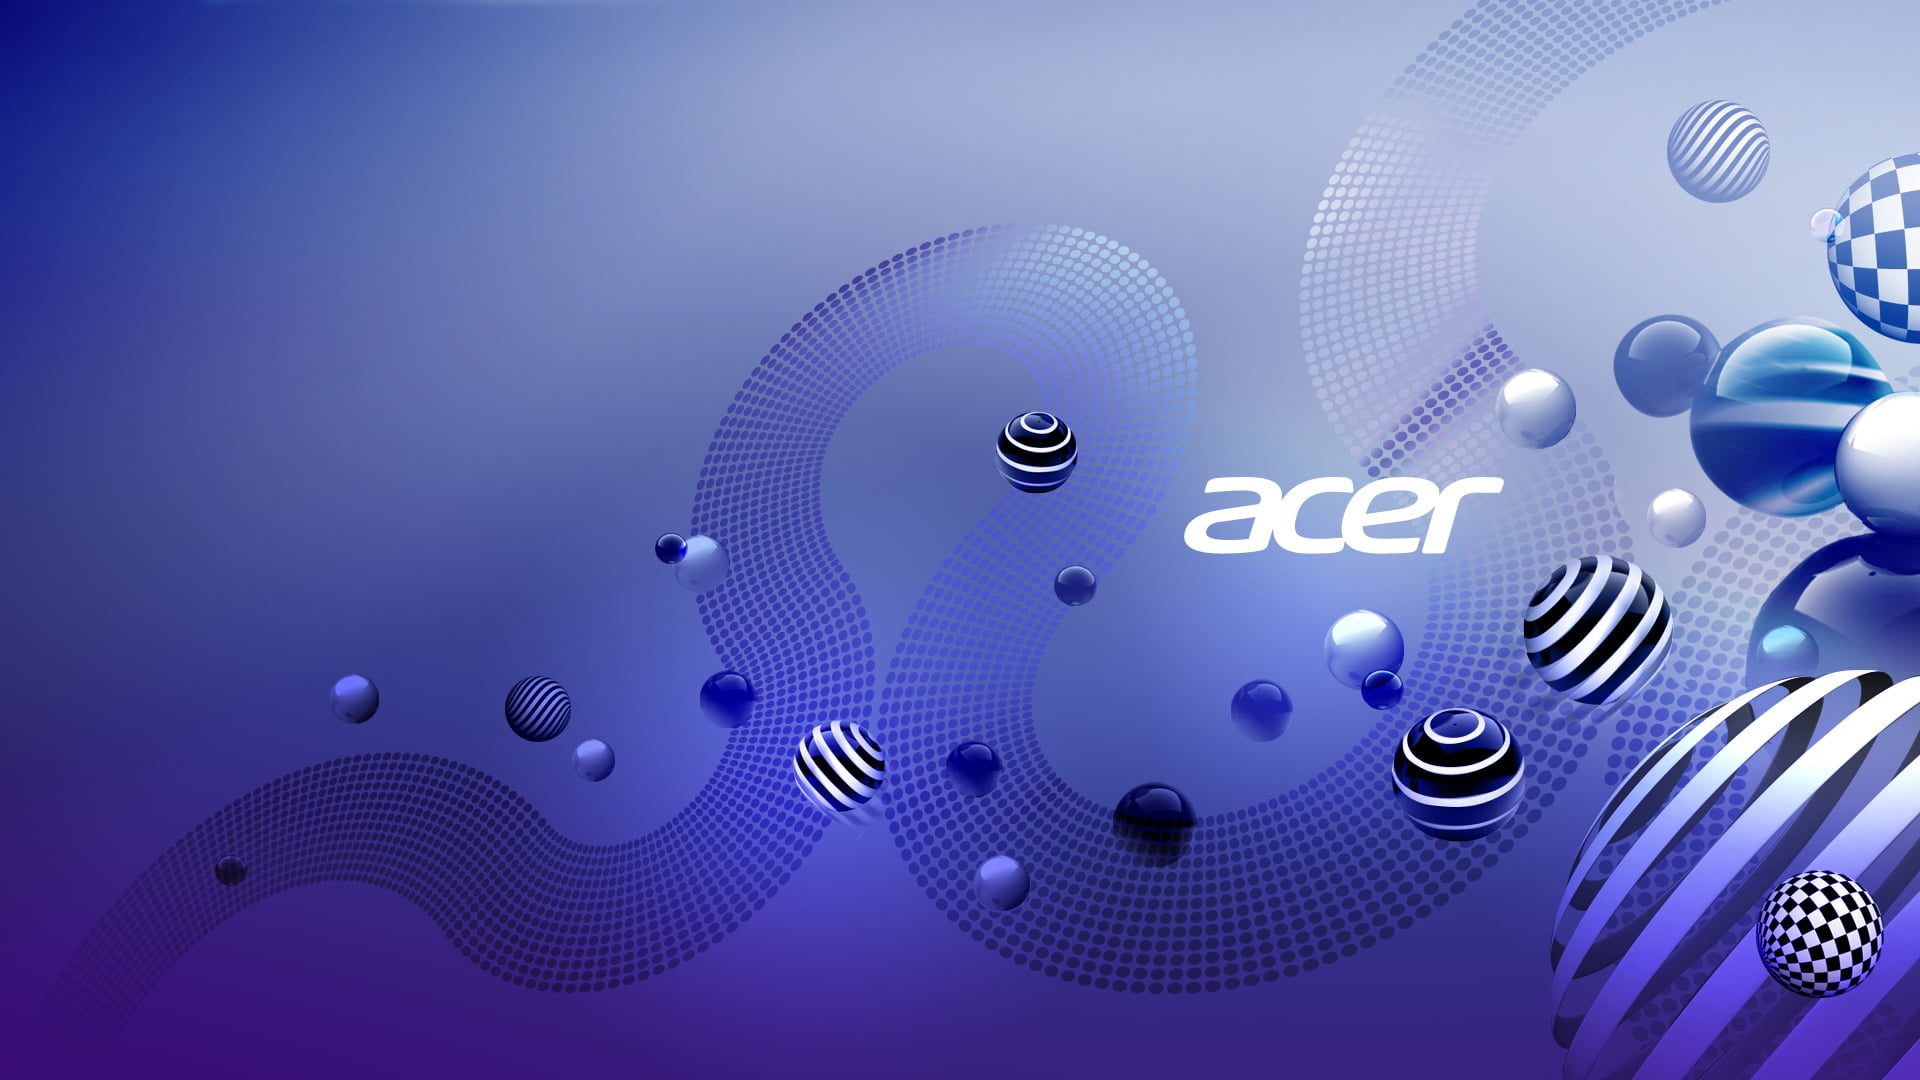 Acer wallpaper, laptop, Aspire, abstract, illustration, vector